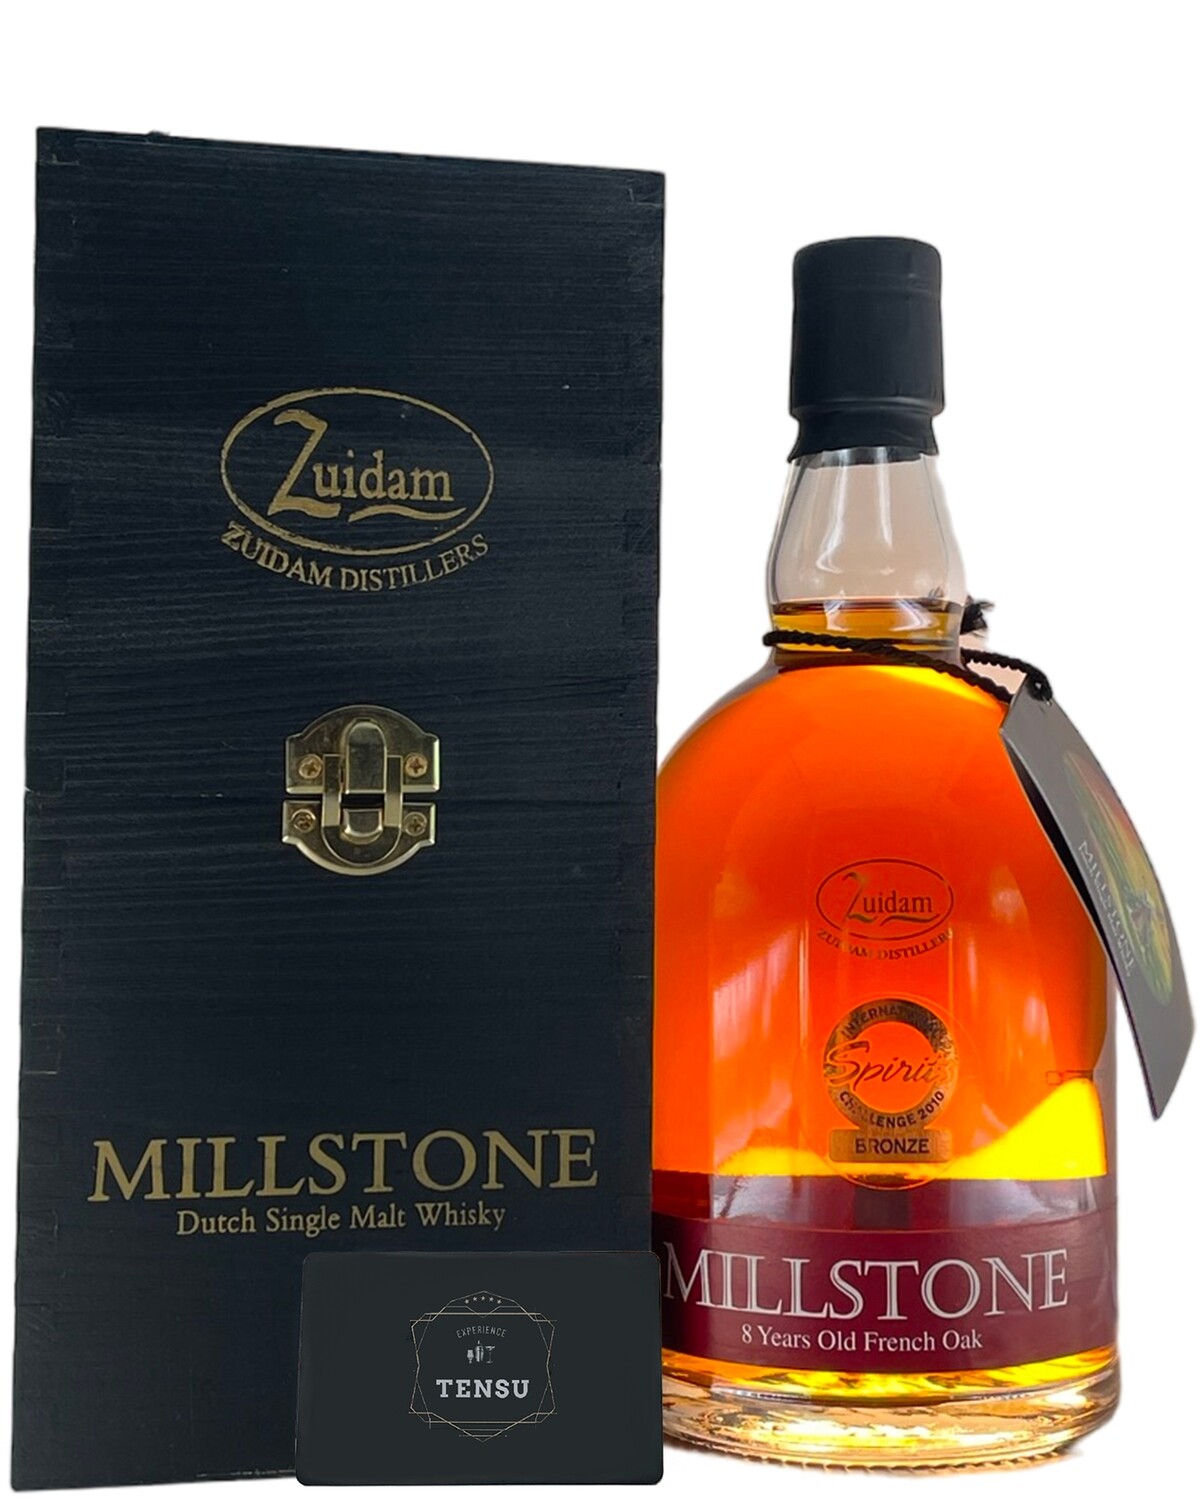 Millstone 8Y French Oak (2000-2009) 40.0 "Zuidam"